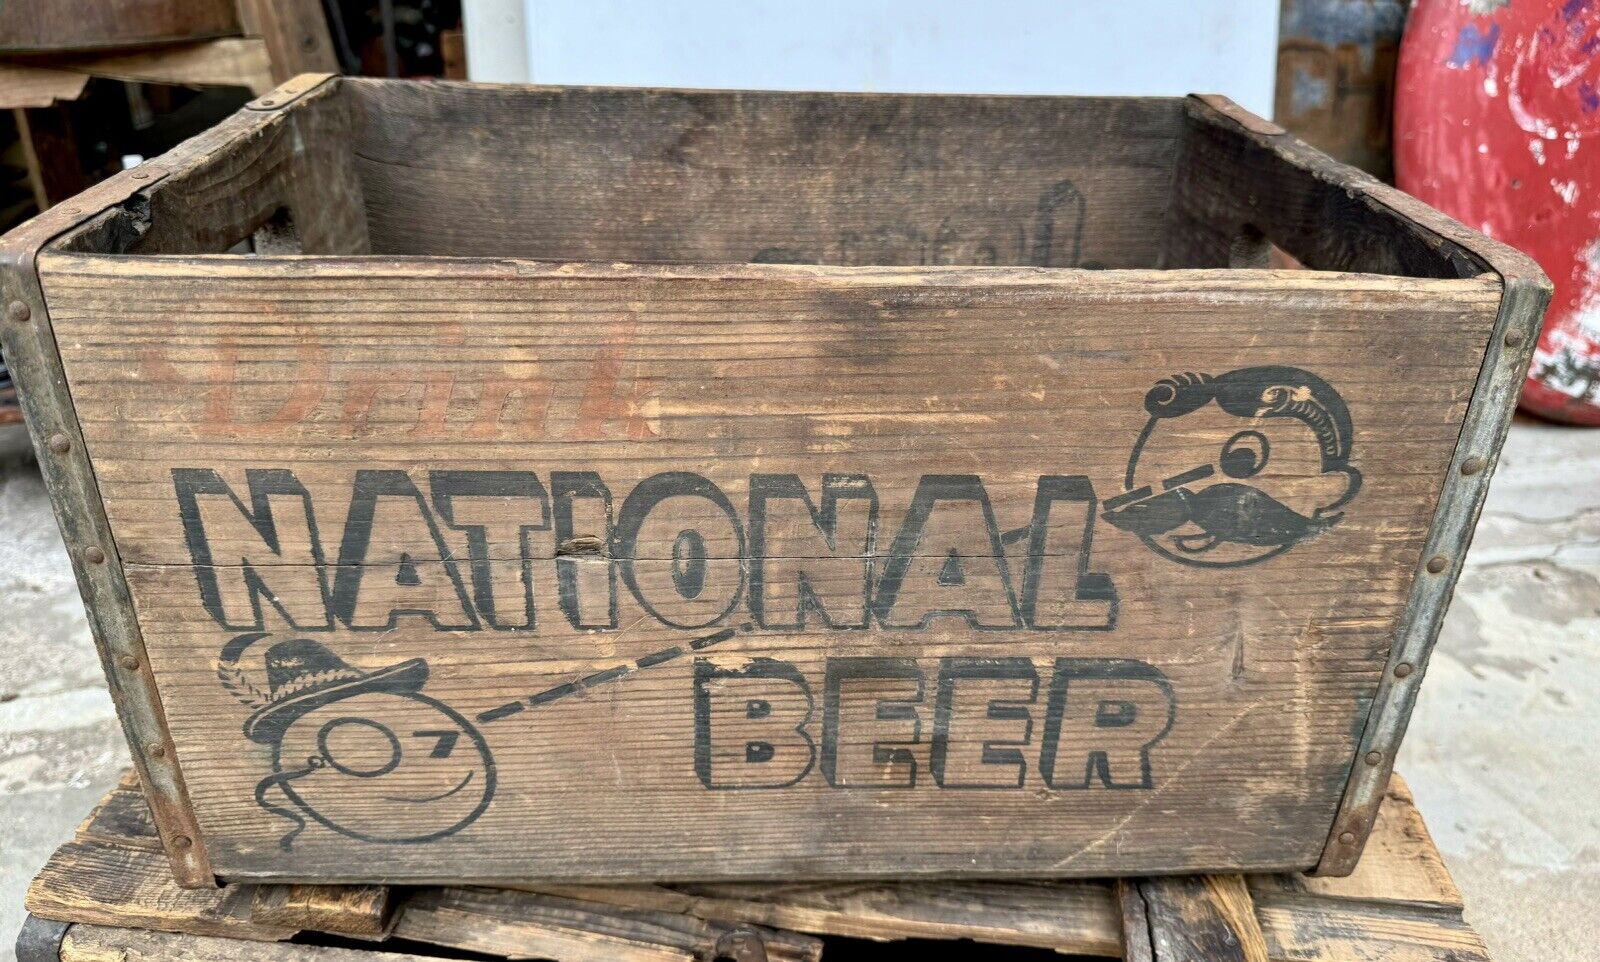 Vtg 1940s National Bohemian Beer Wood Beer Crate Box Baltimore MD Mr. Boh